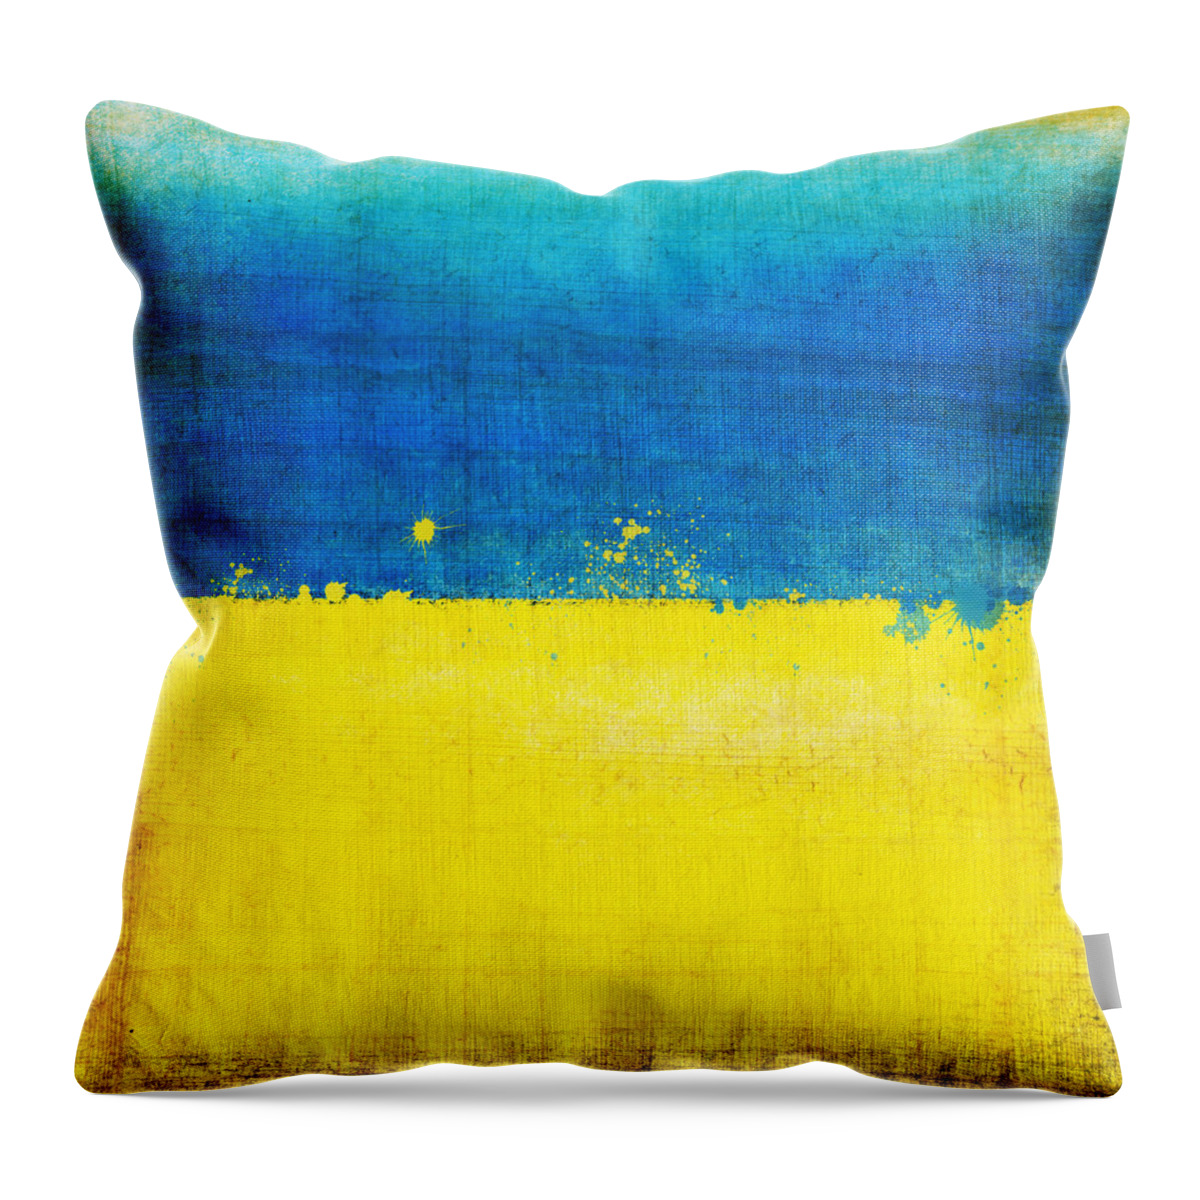 Chalk Throw Pillow featuring the painting Ukraine flag by Setsiri Silapasuwanchai